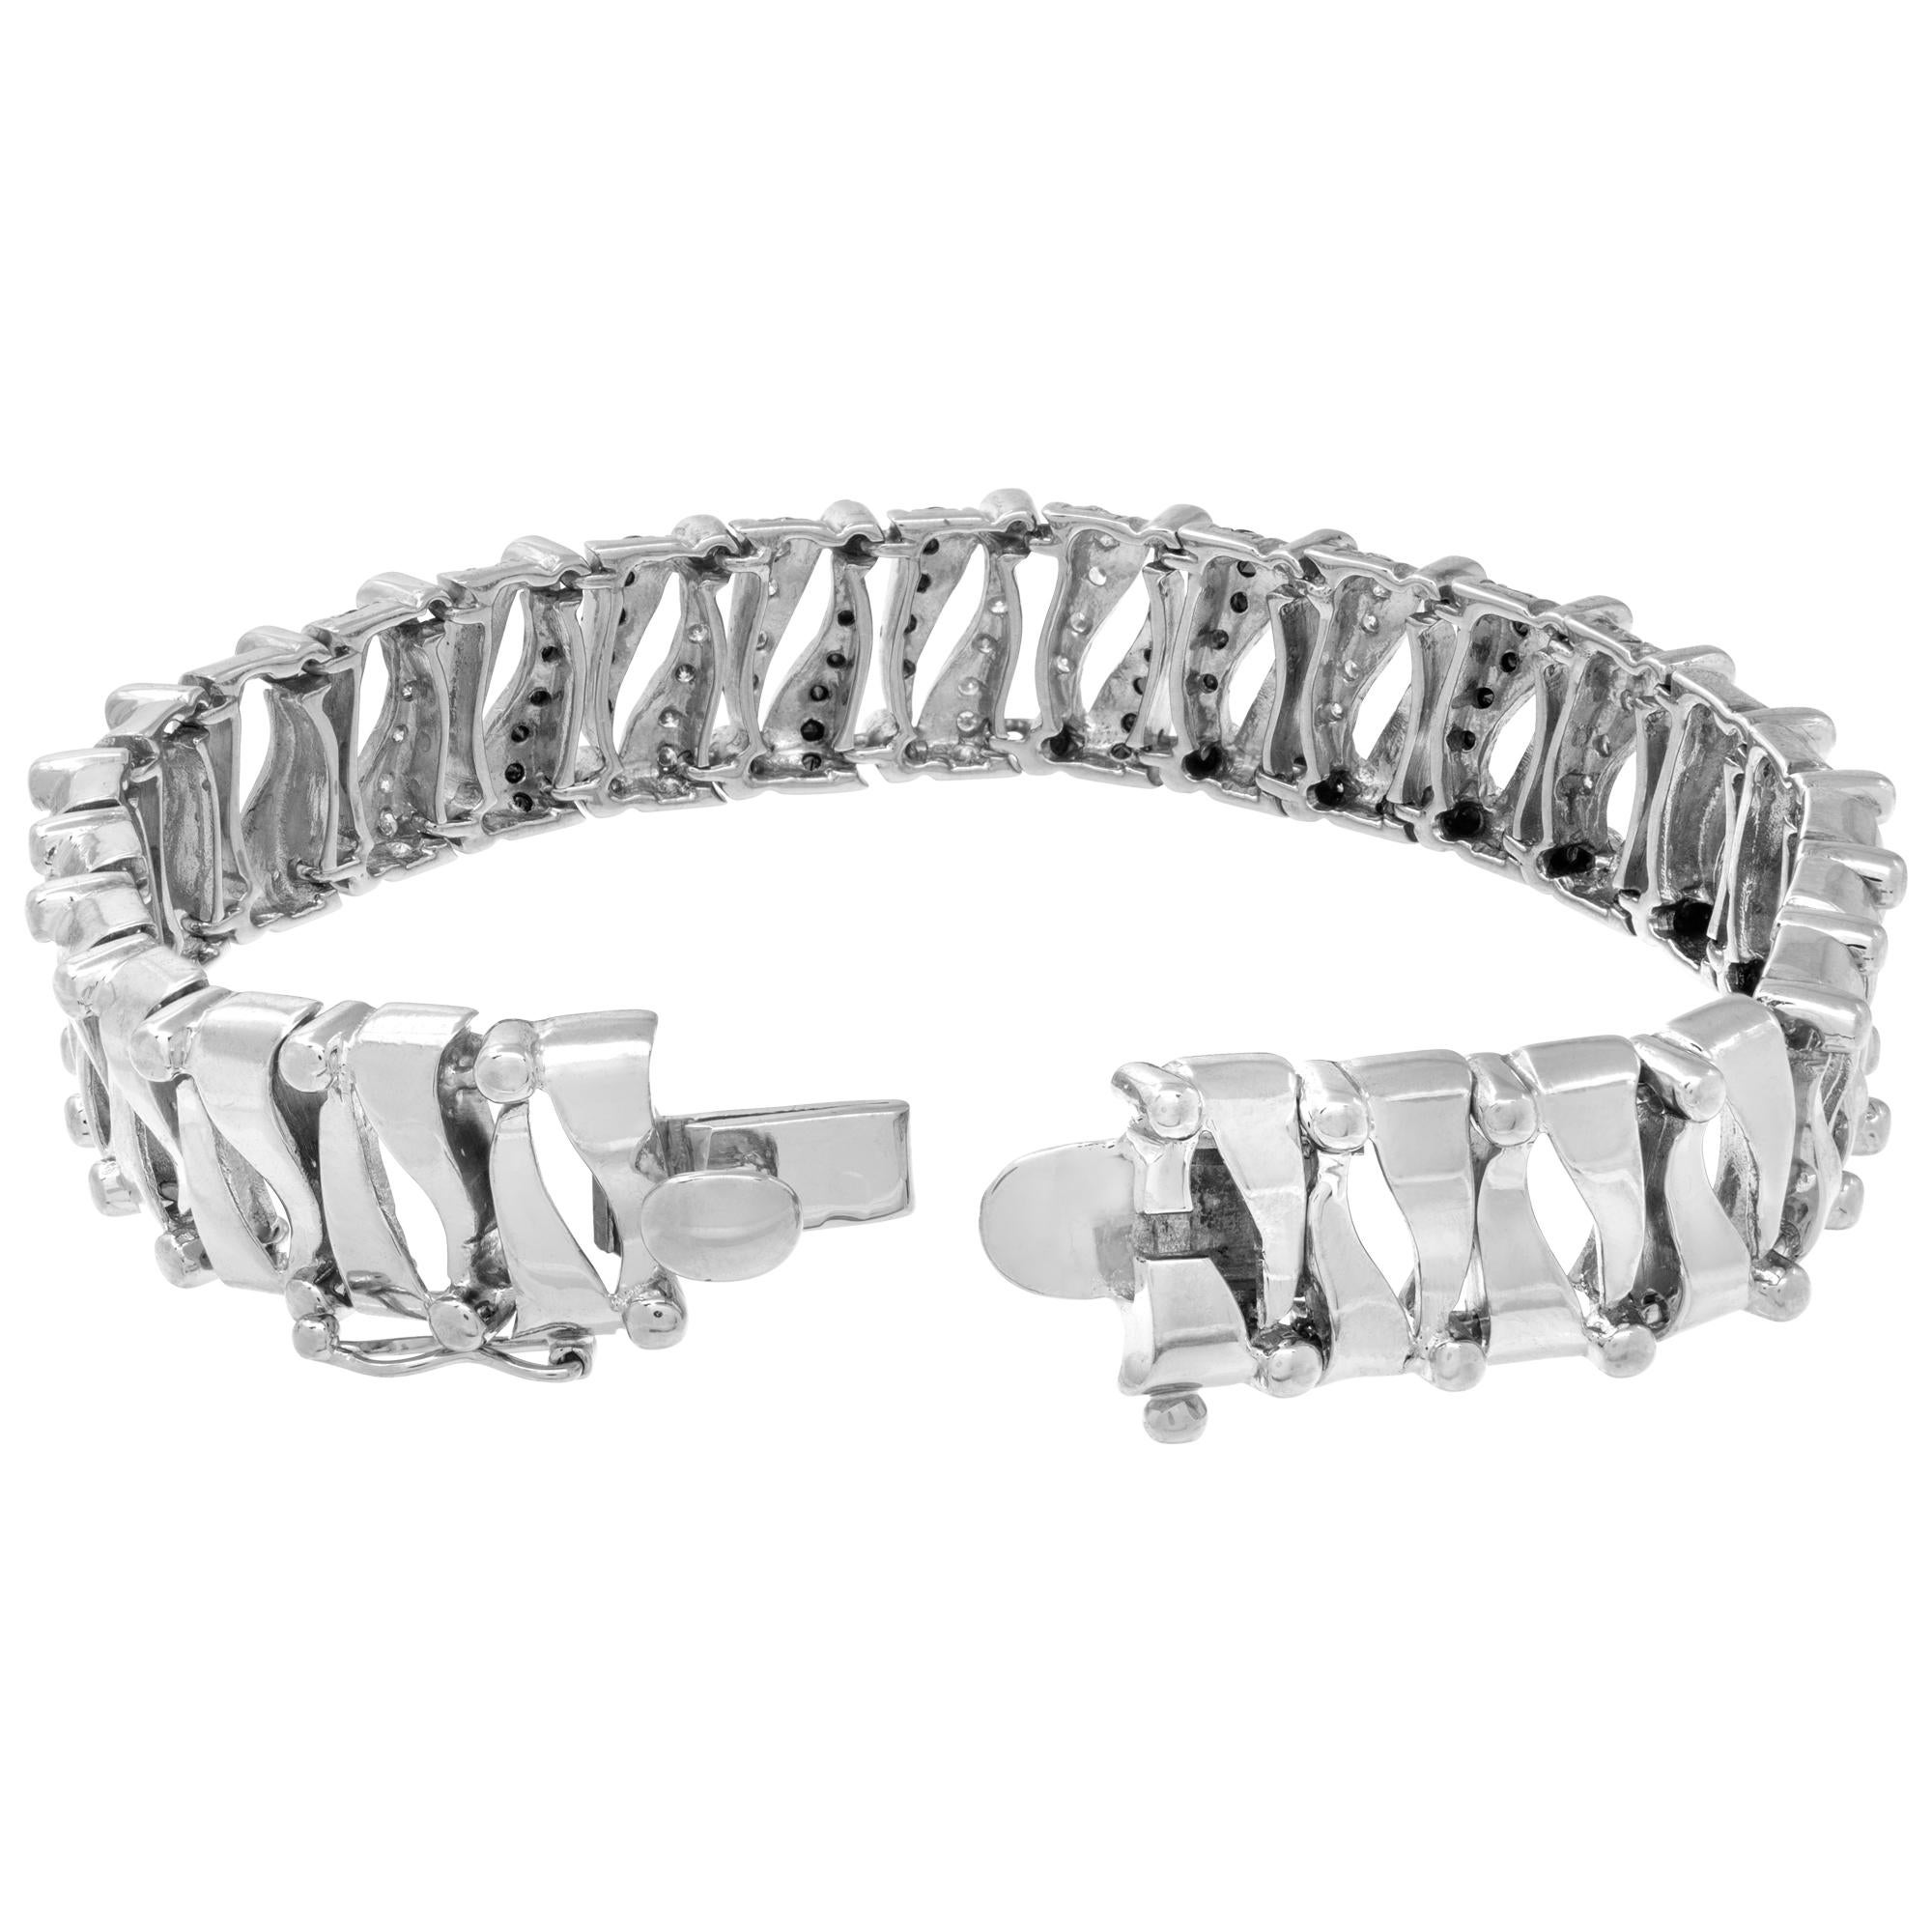 White gold white & black diamond bracelet In Excellent Condition For Sale In Surfside, FL